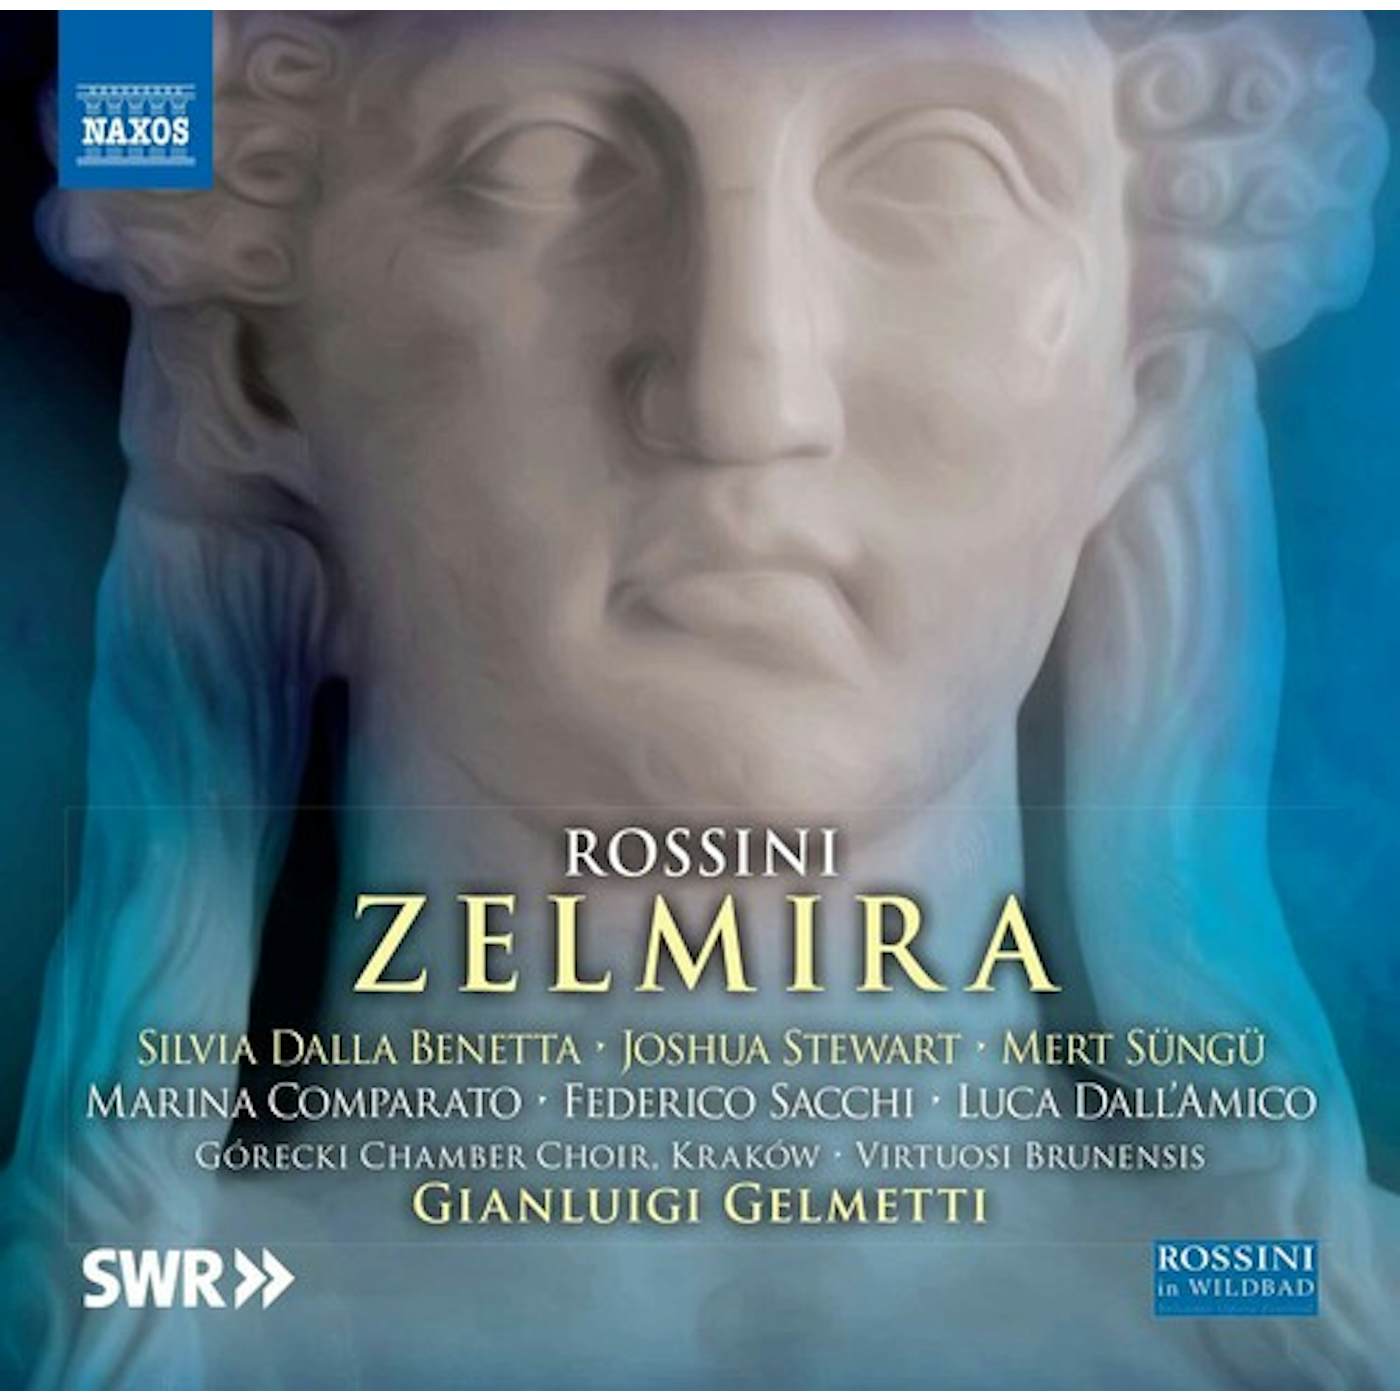 Rossini ZELMIRA CD